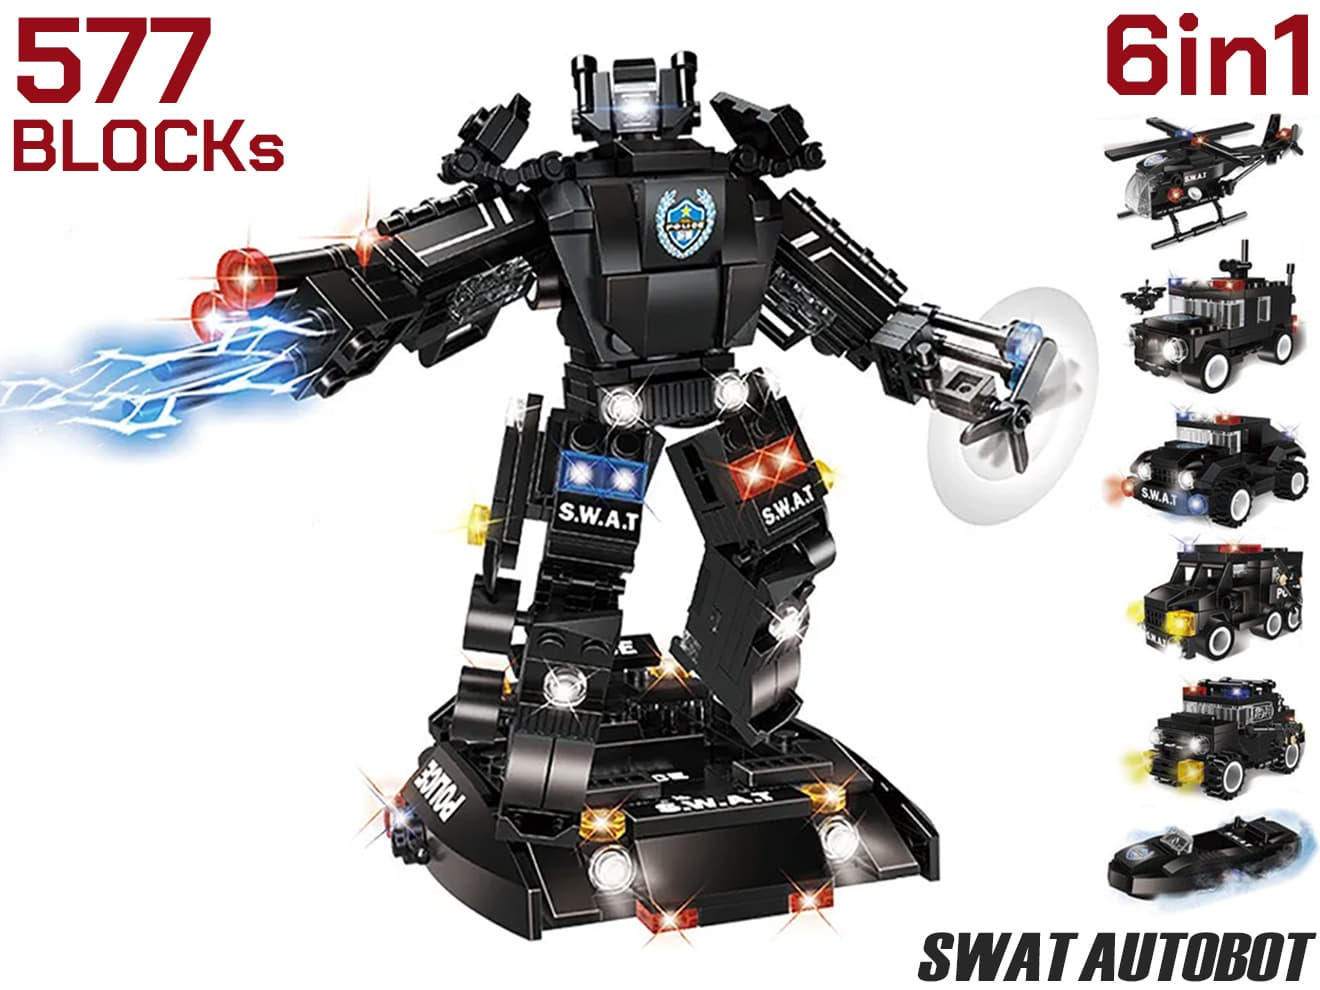 AFM SWAT シリーズ 6in1オートボット 577Blocks